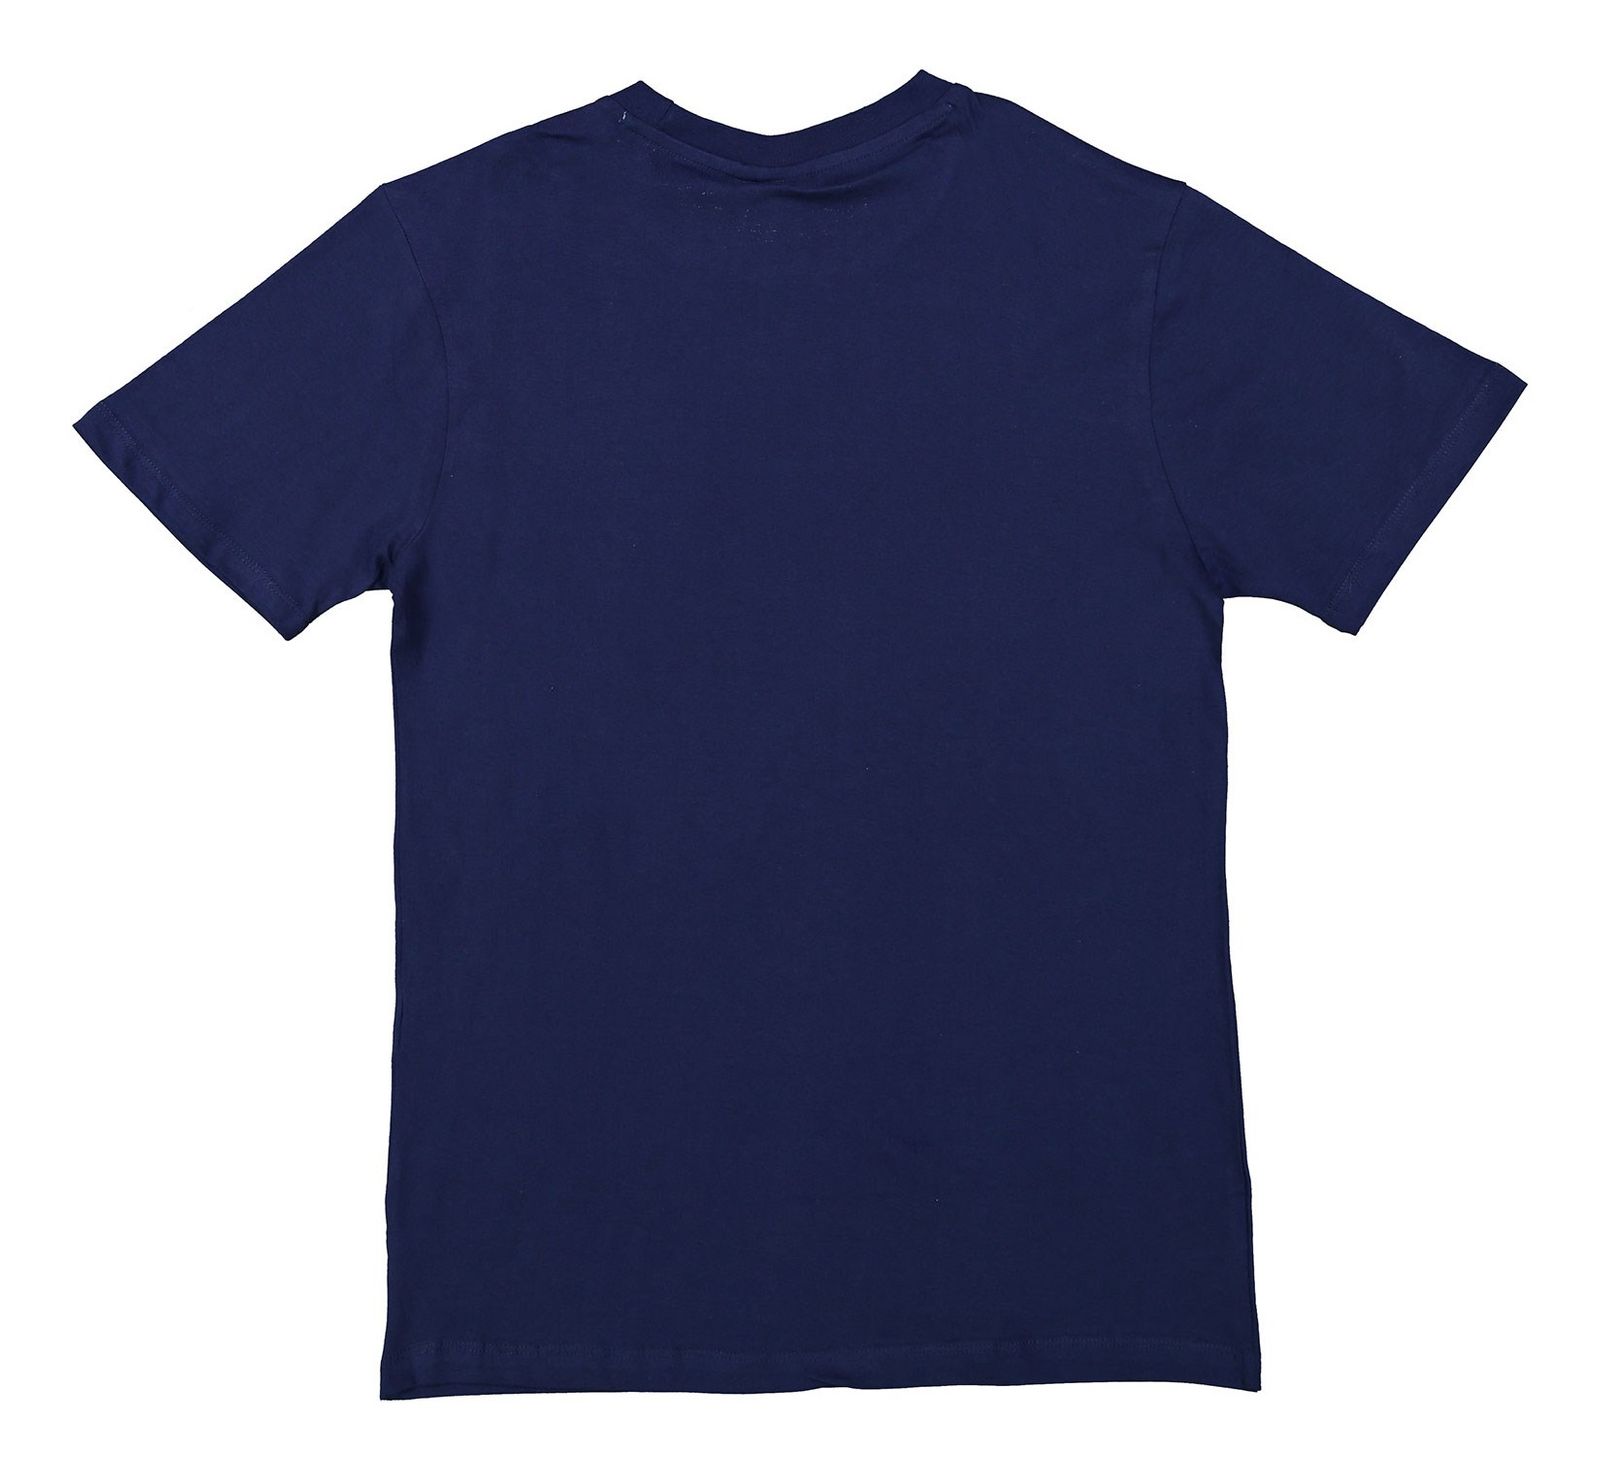 تی شرت و شلوارک پسرانه - بلوکیدز - چند رنگ - 4